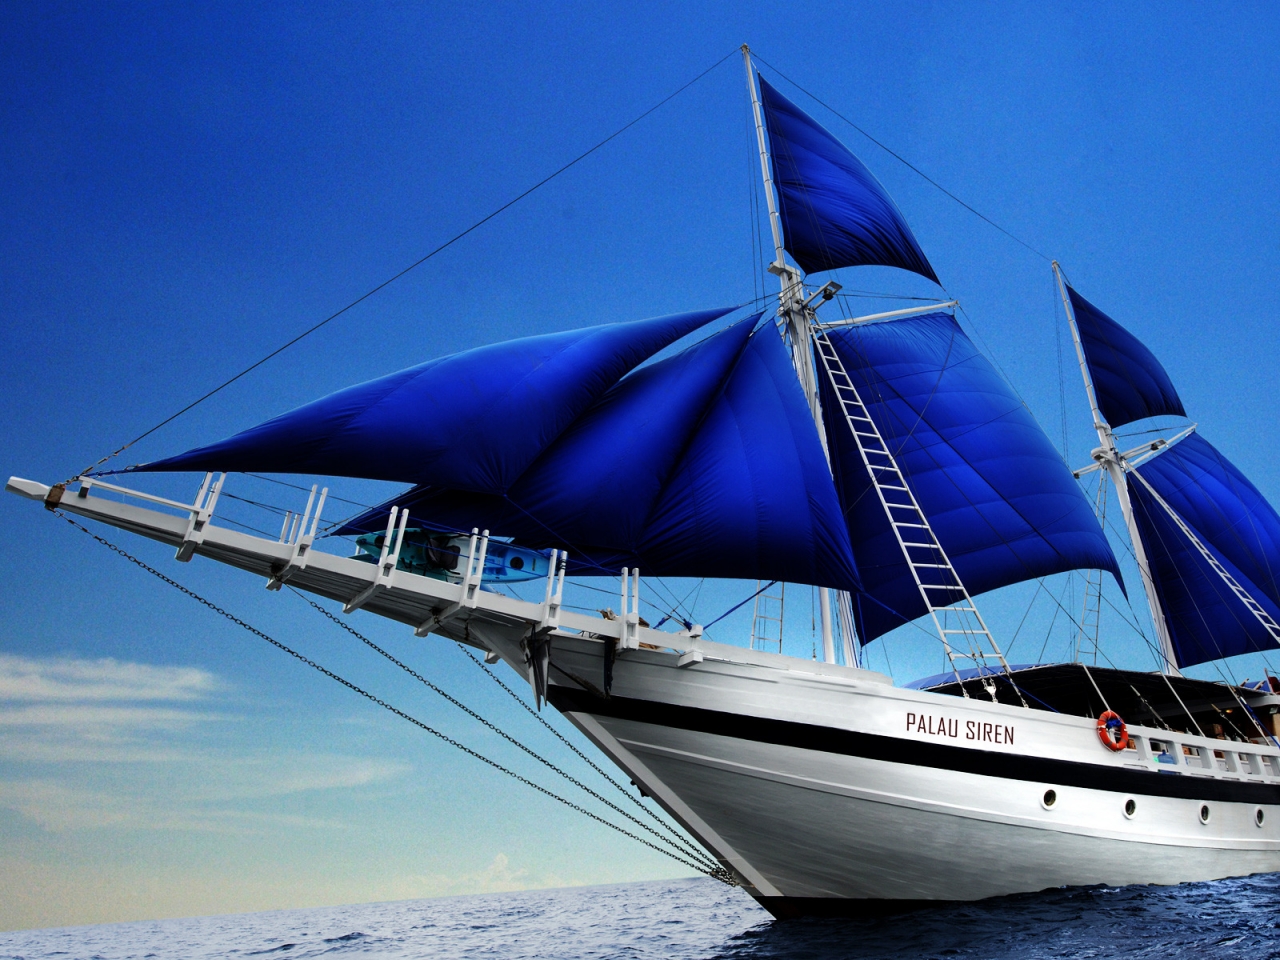 Palau Siren Boat for 1280 x 960 resolution